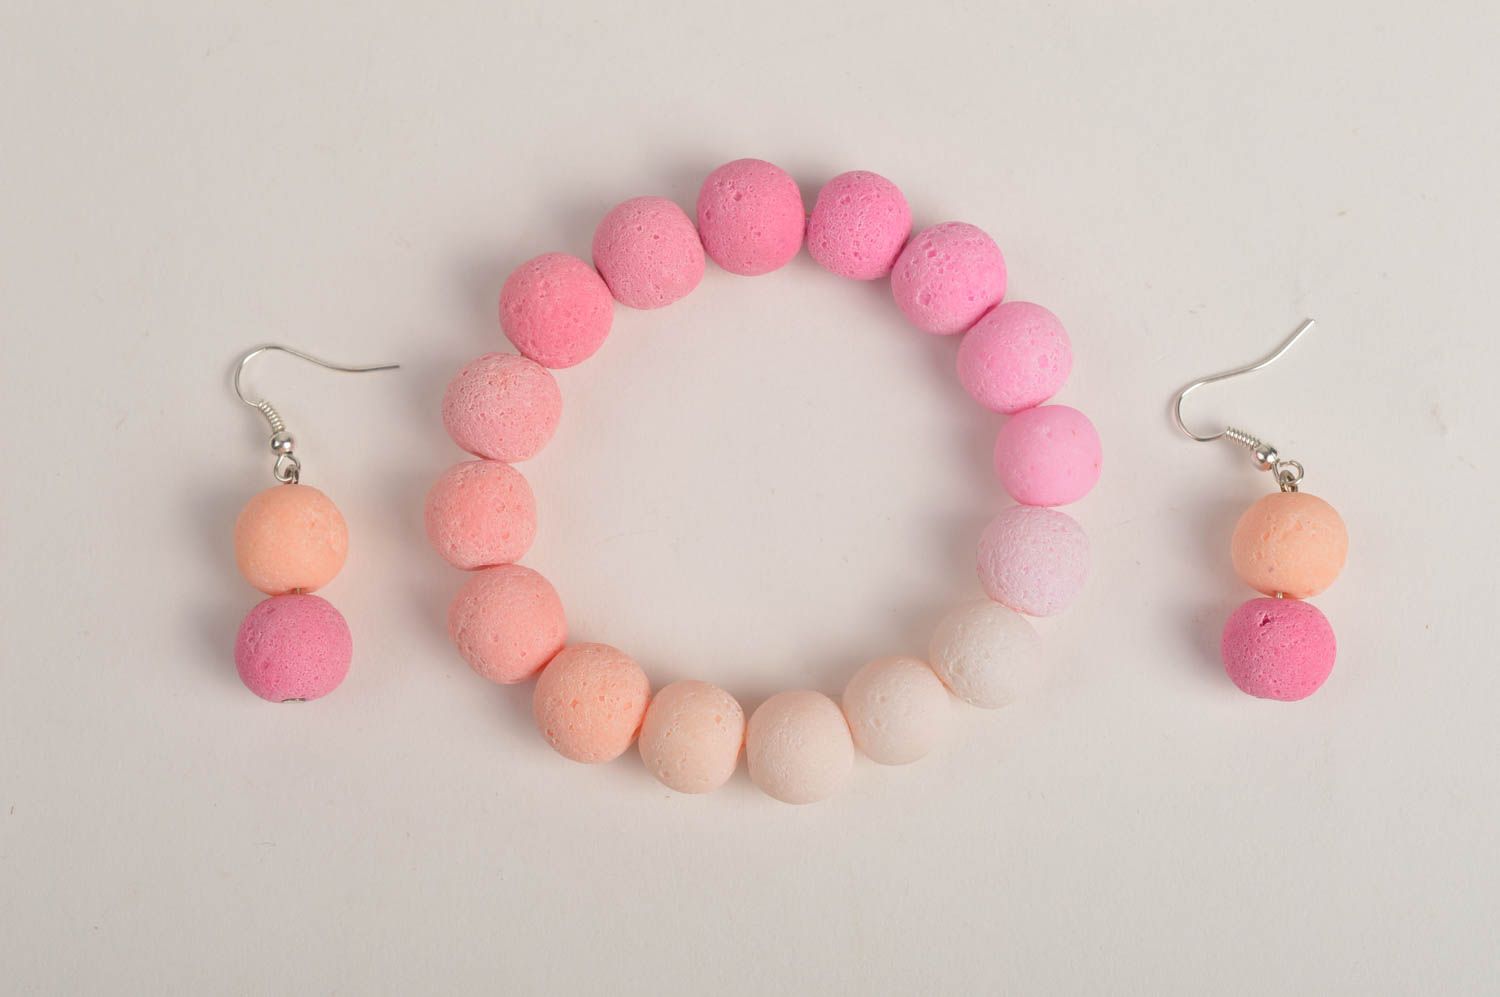 Wrist bracelet fashion earrings polymer clay jewelry pink beads women jewelry  photo 3